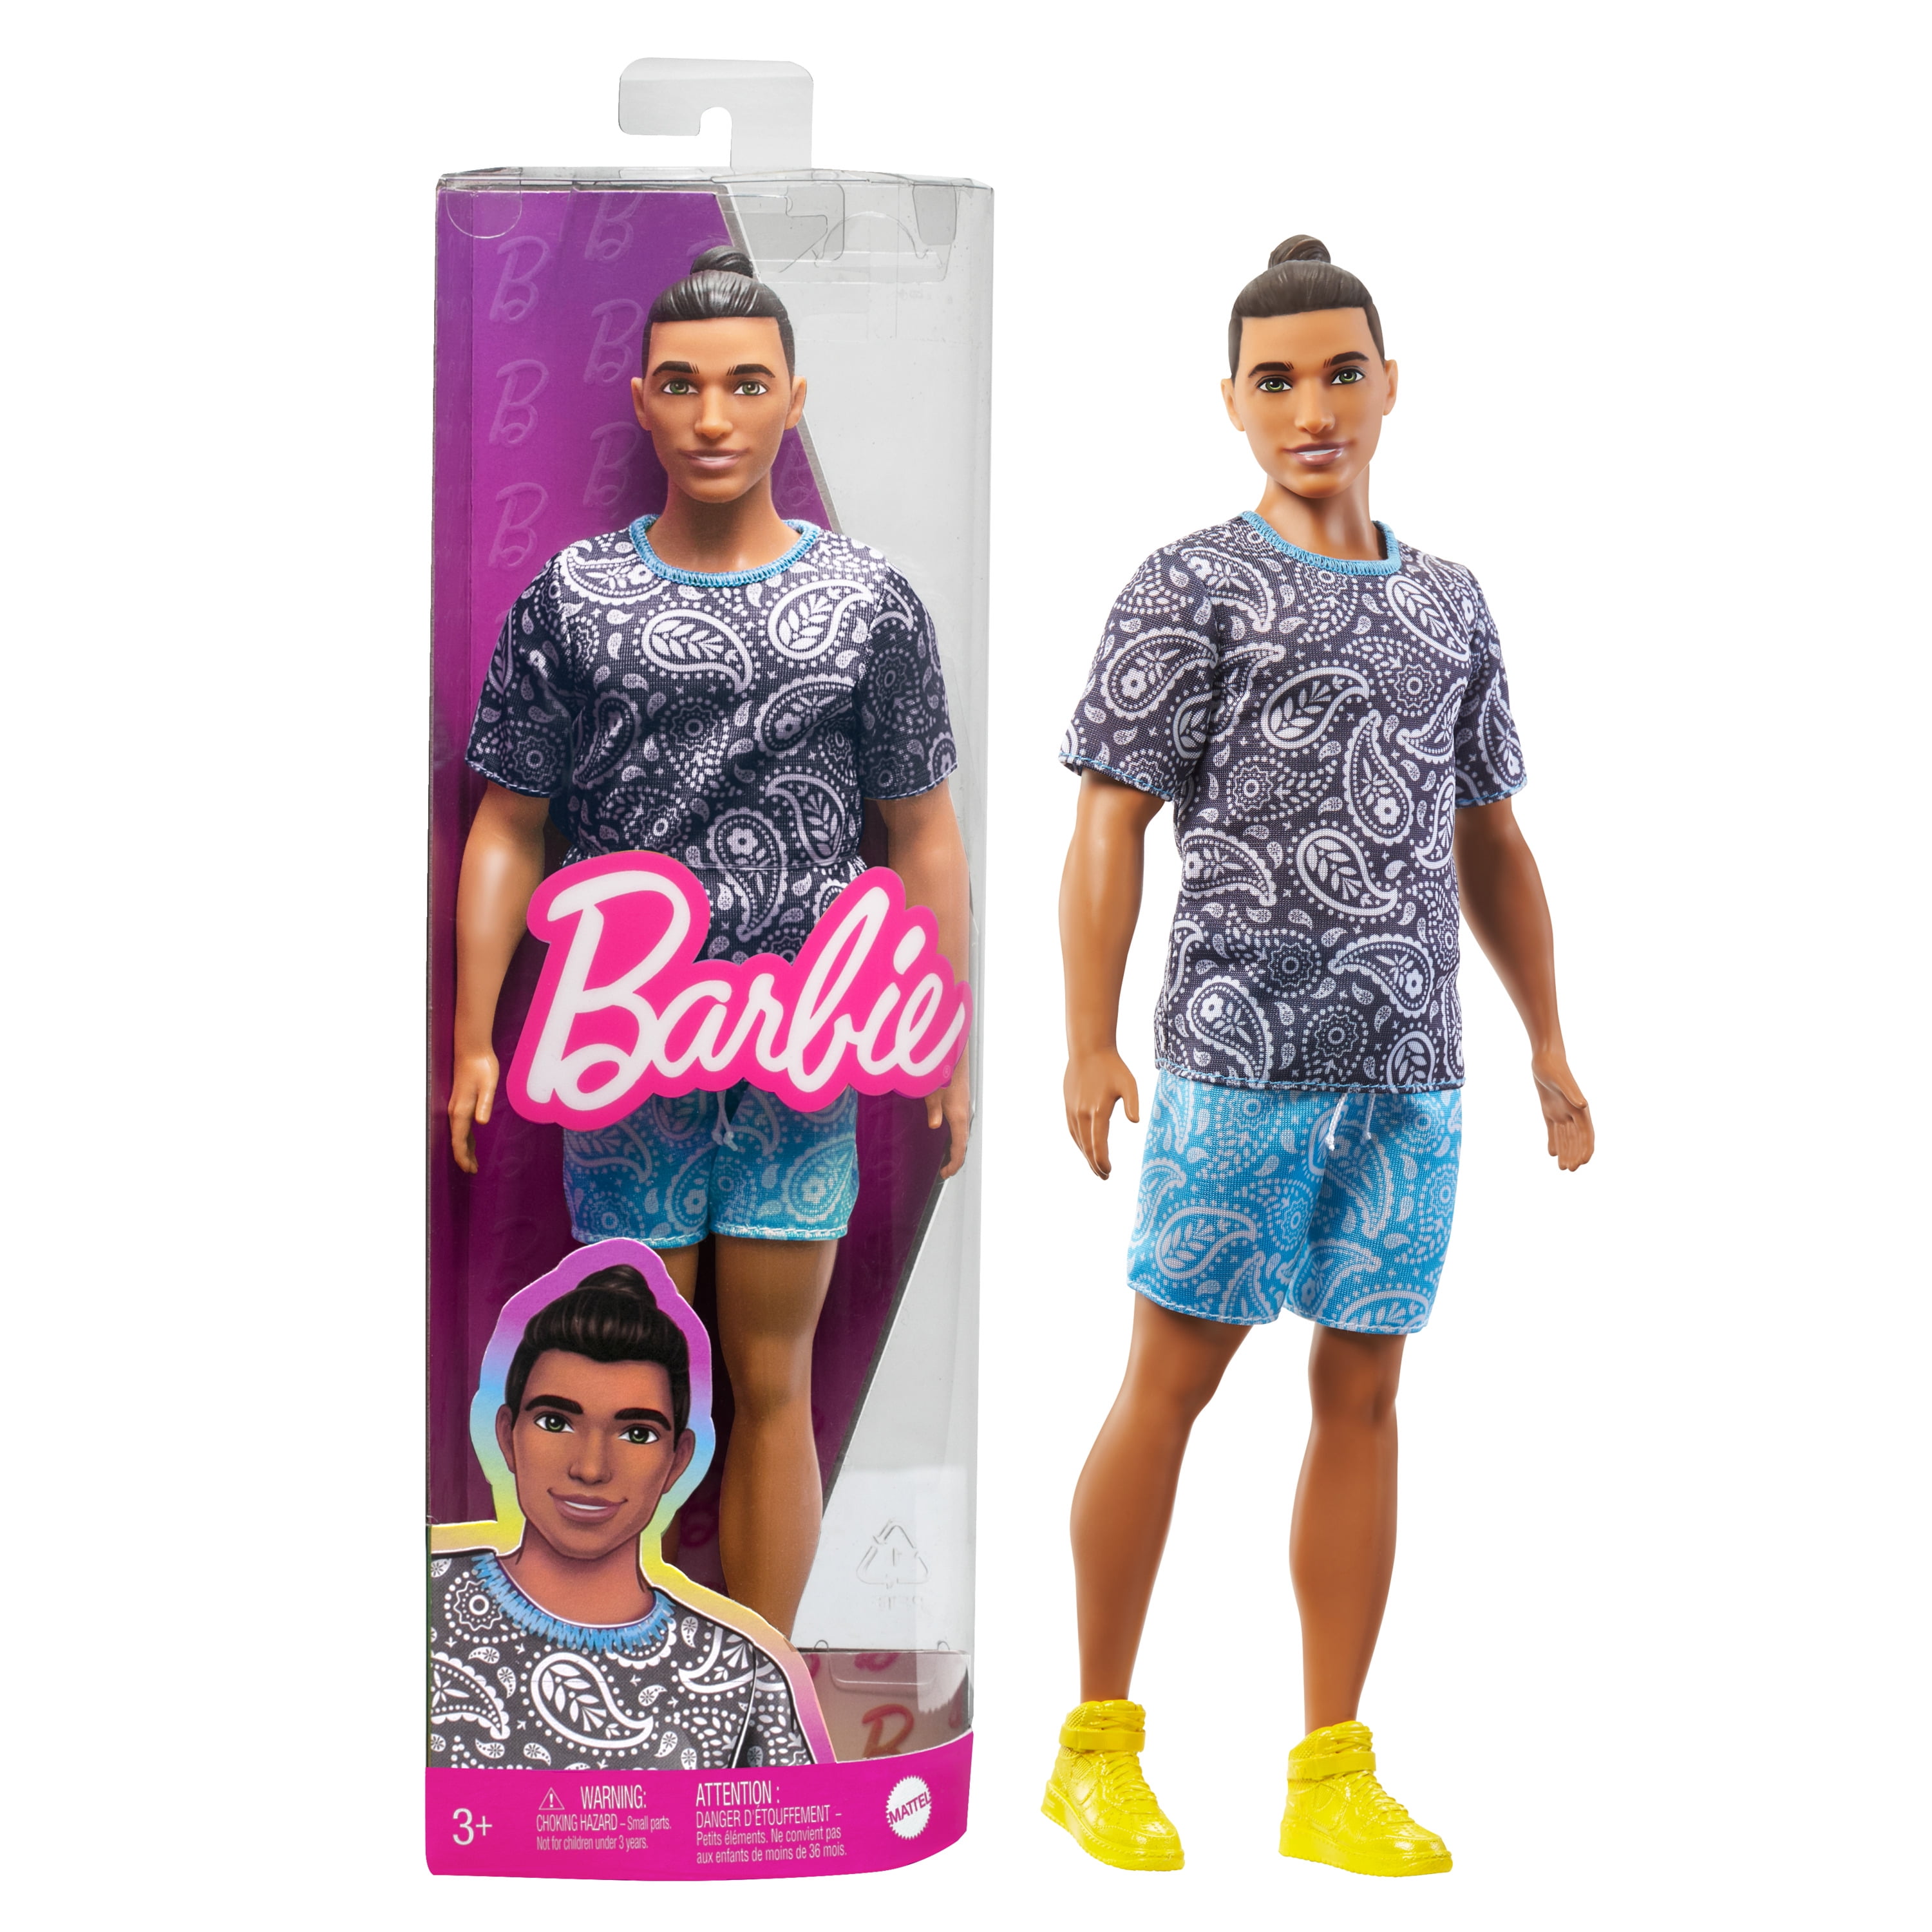 Soccer Ken Doll